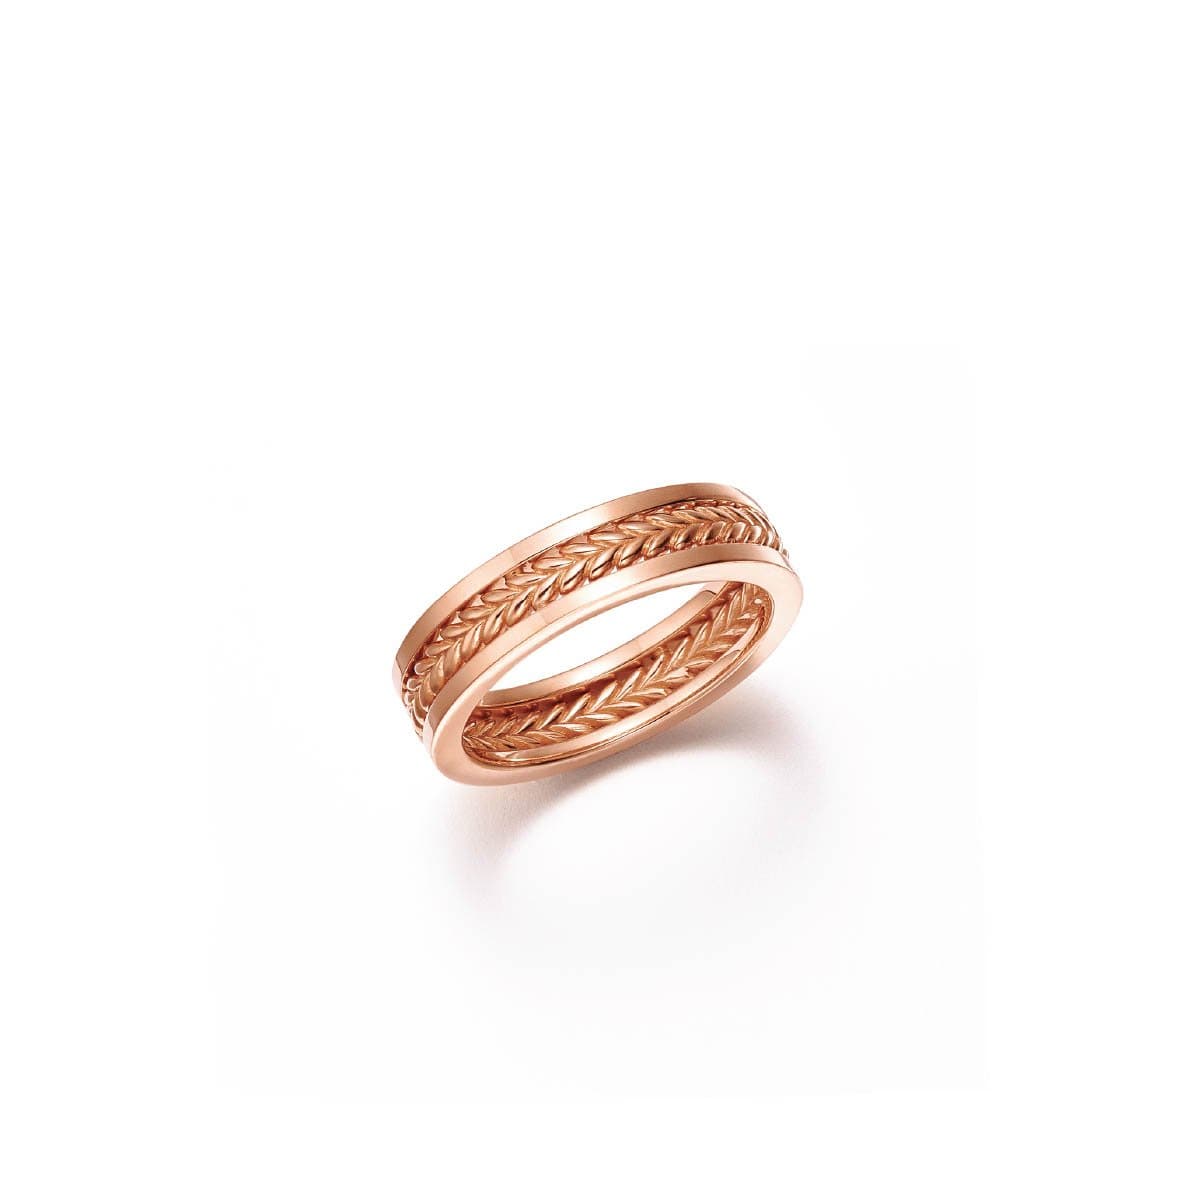 Smitten Laurel Sustainable Rose Gold Wedding Ring - Full View